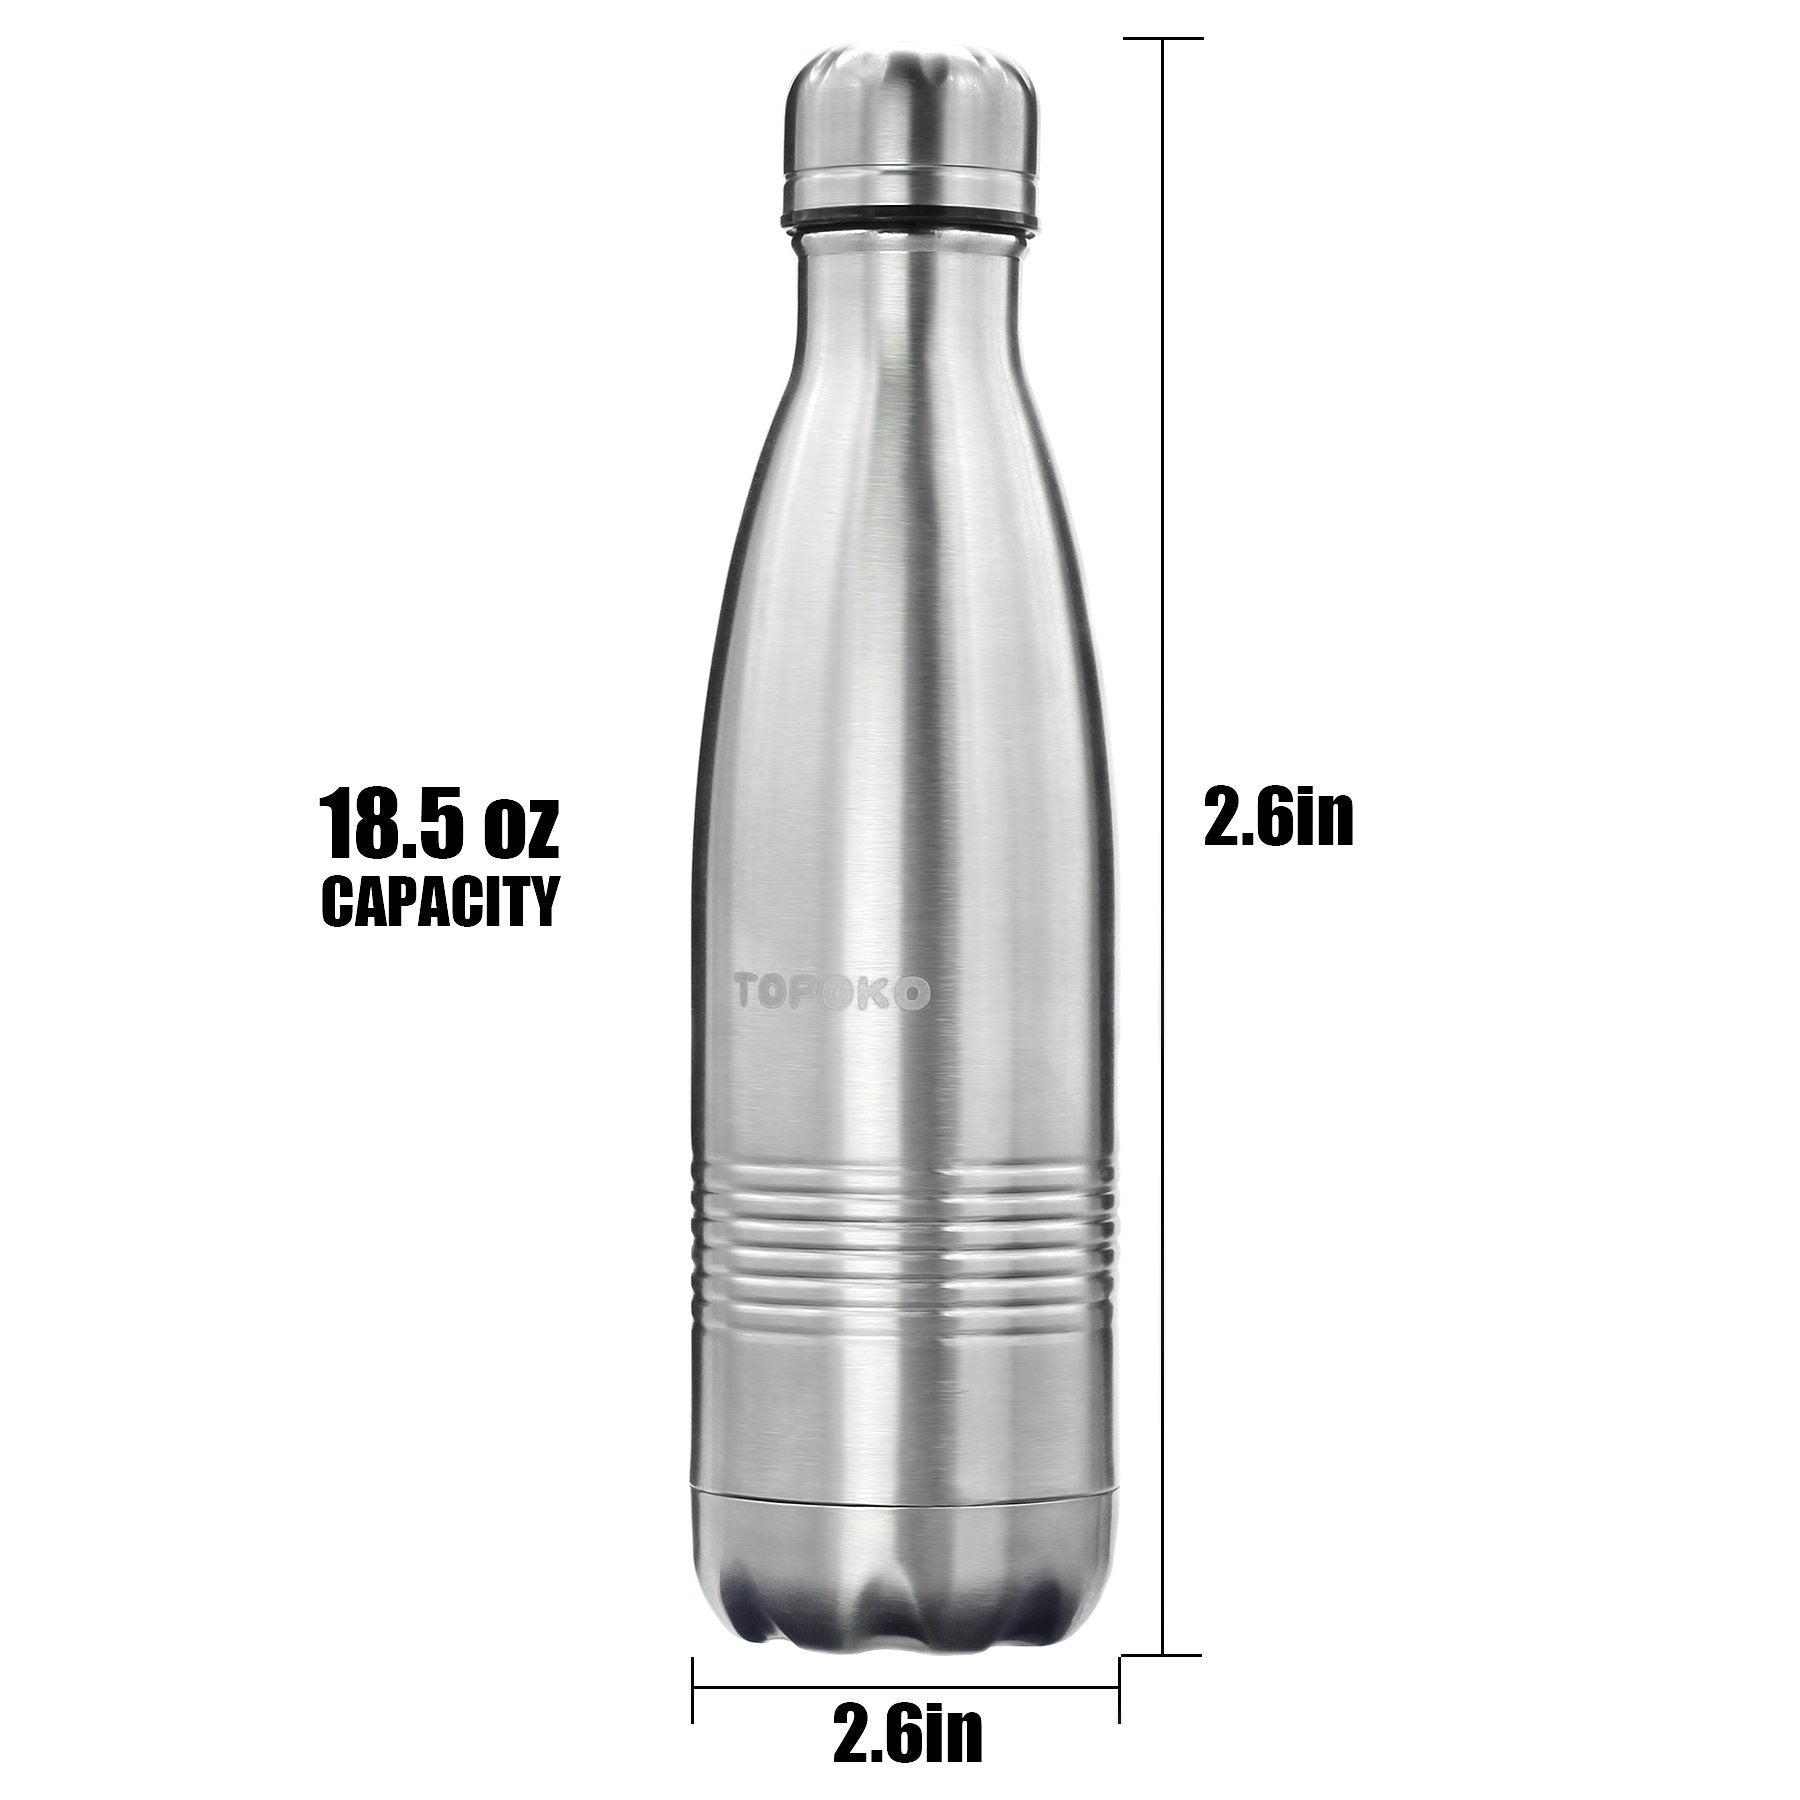 TOPOKO Kid's Auto Flip Stainless Steel Double Wall Water Bottle, Vacuu